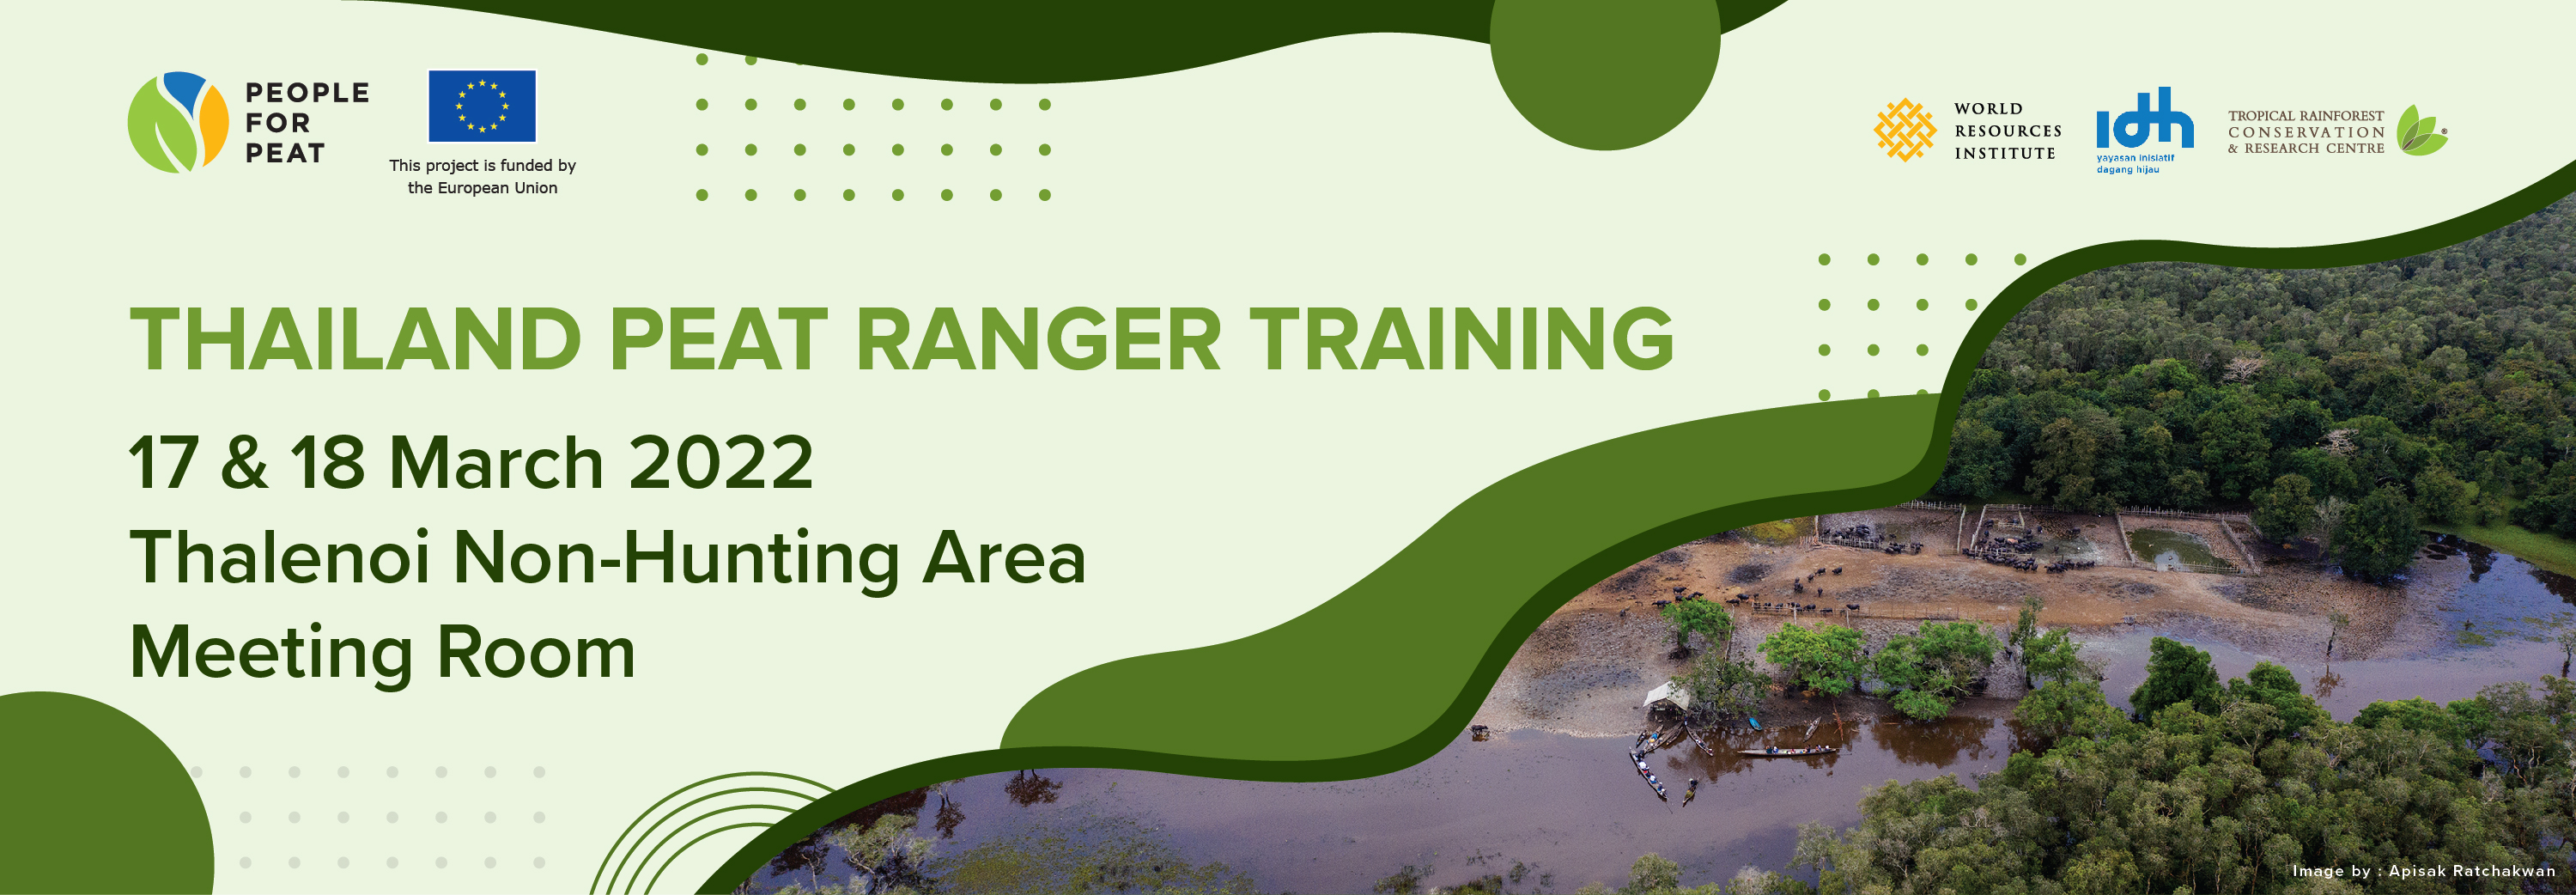 Thailand Peat Ranger Training